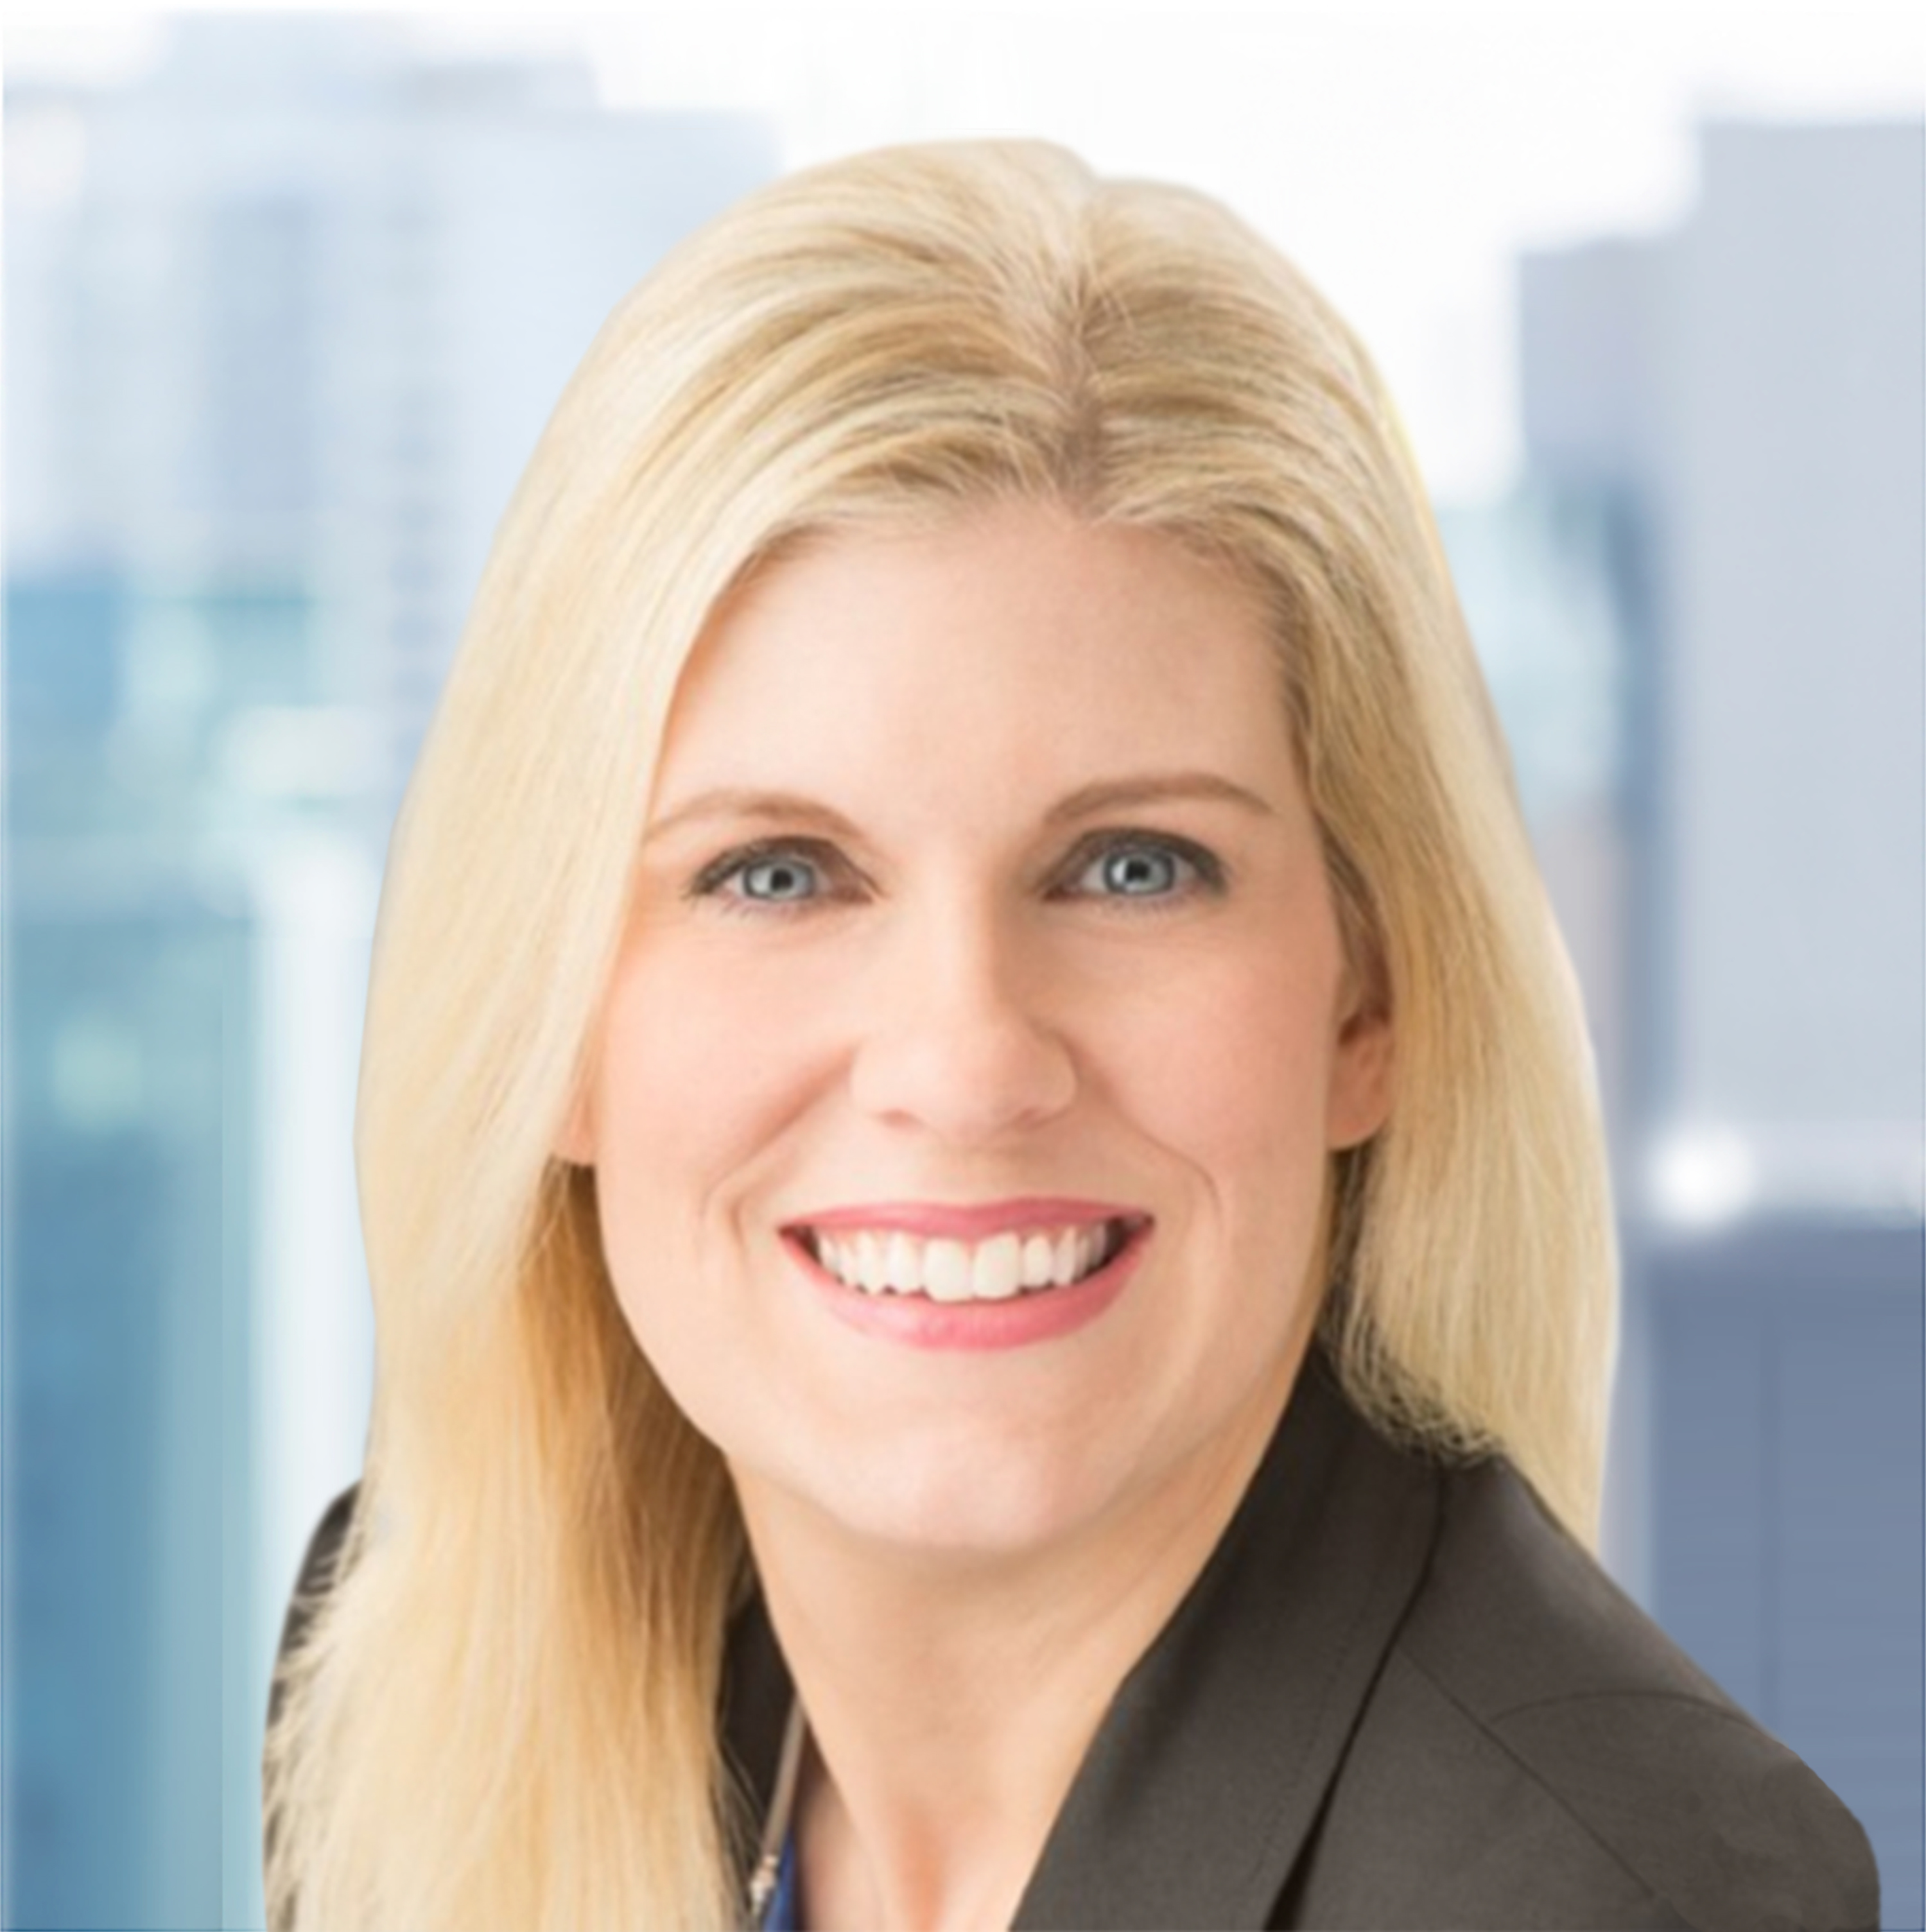 Nassau Financial Group announces Christine A. Janofsky as Chief Financial Officer